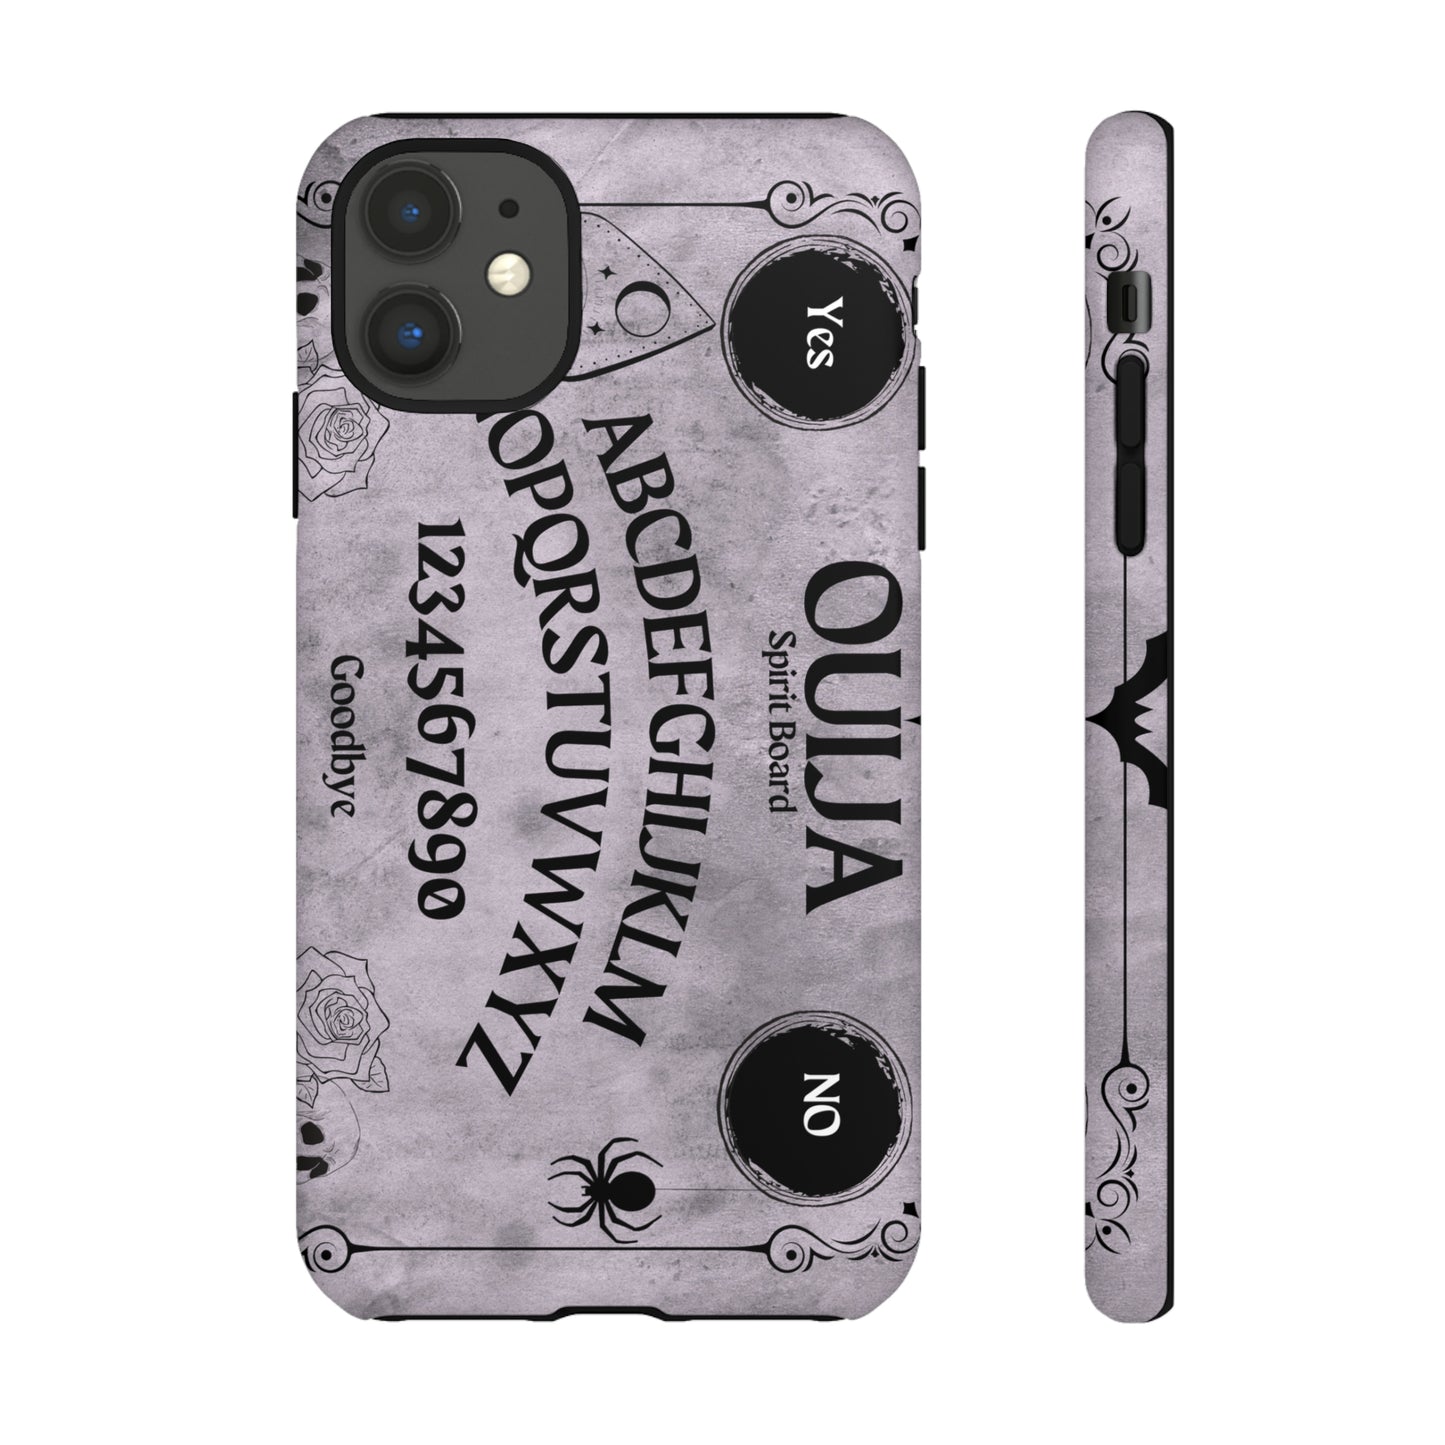 Ouija Board Tough Phone Cases For Samsung iPhone GooglePhone CaseVTZdesignsiPhone 11MatteAccessoriesGlossyhalloween